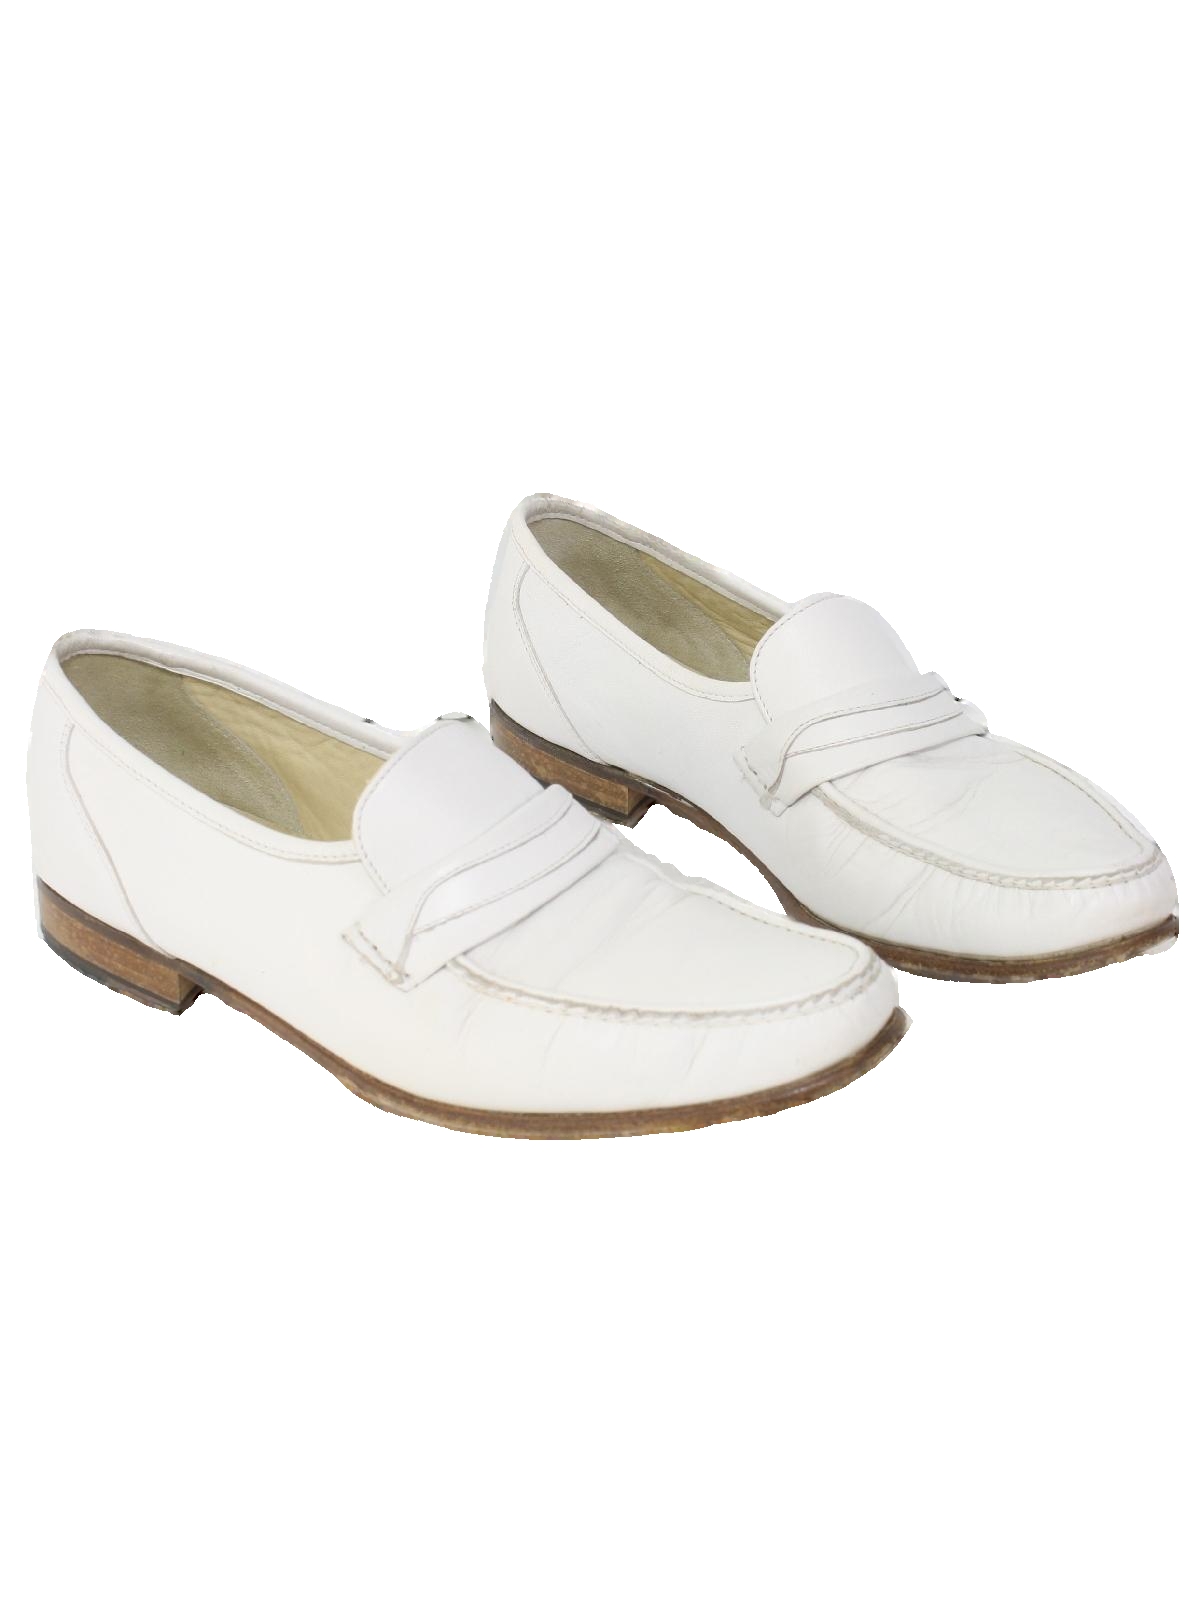 Vintage Nordstrom 1980s Shoes: 80s -Nordstrom- Mens white background ...